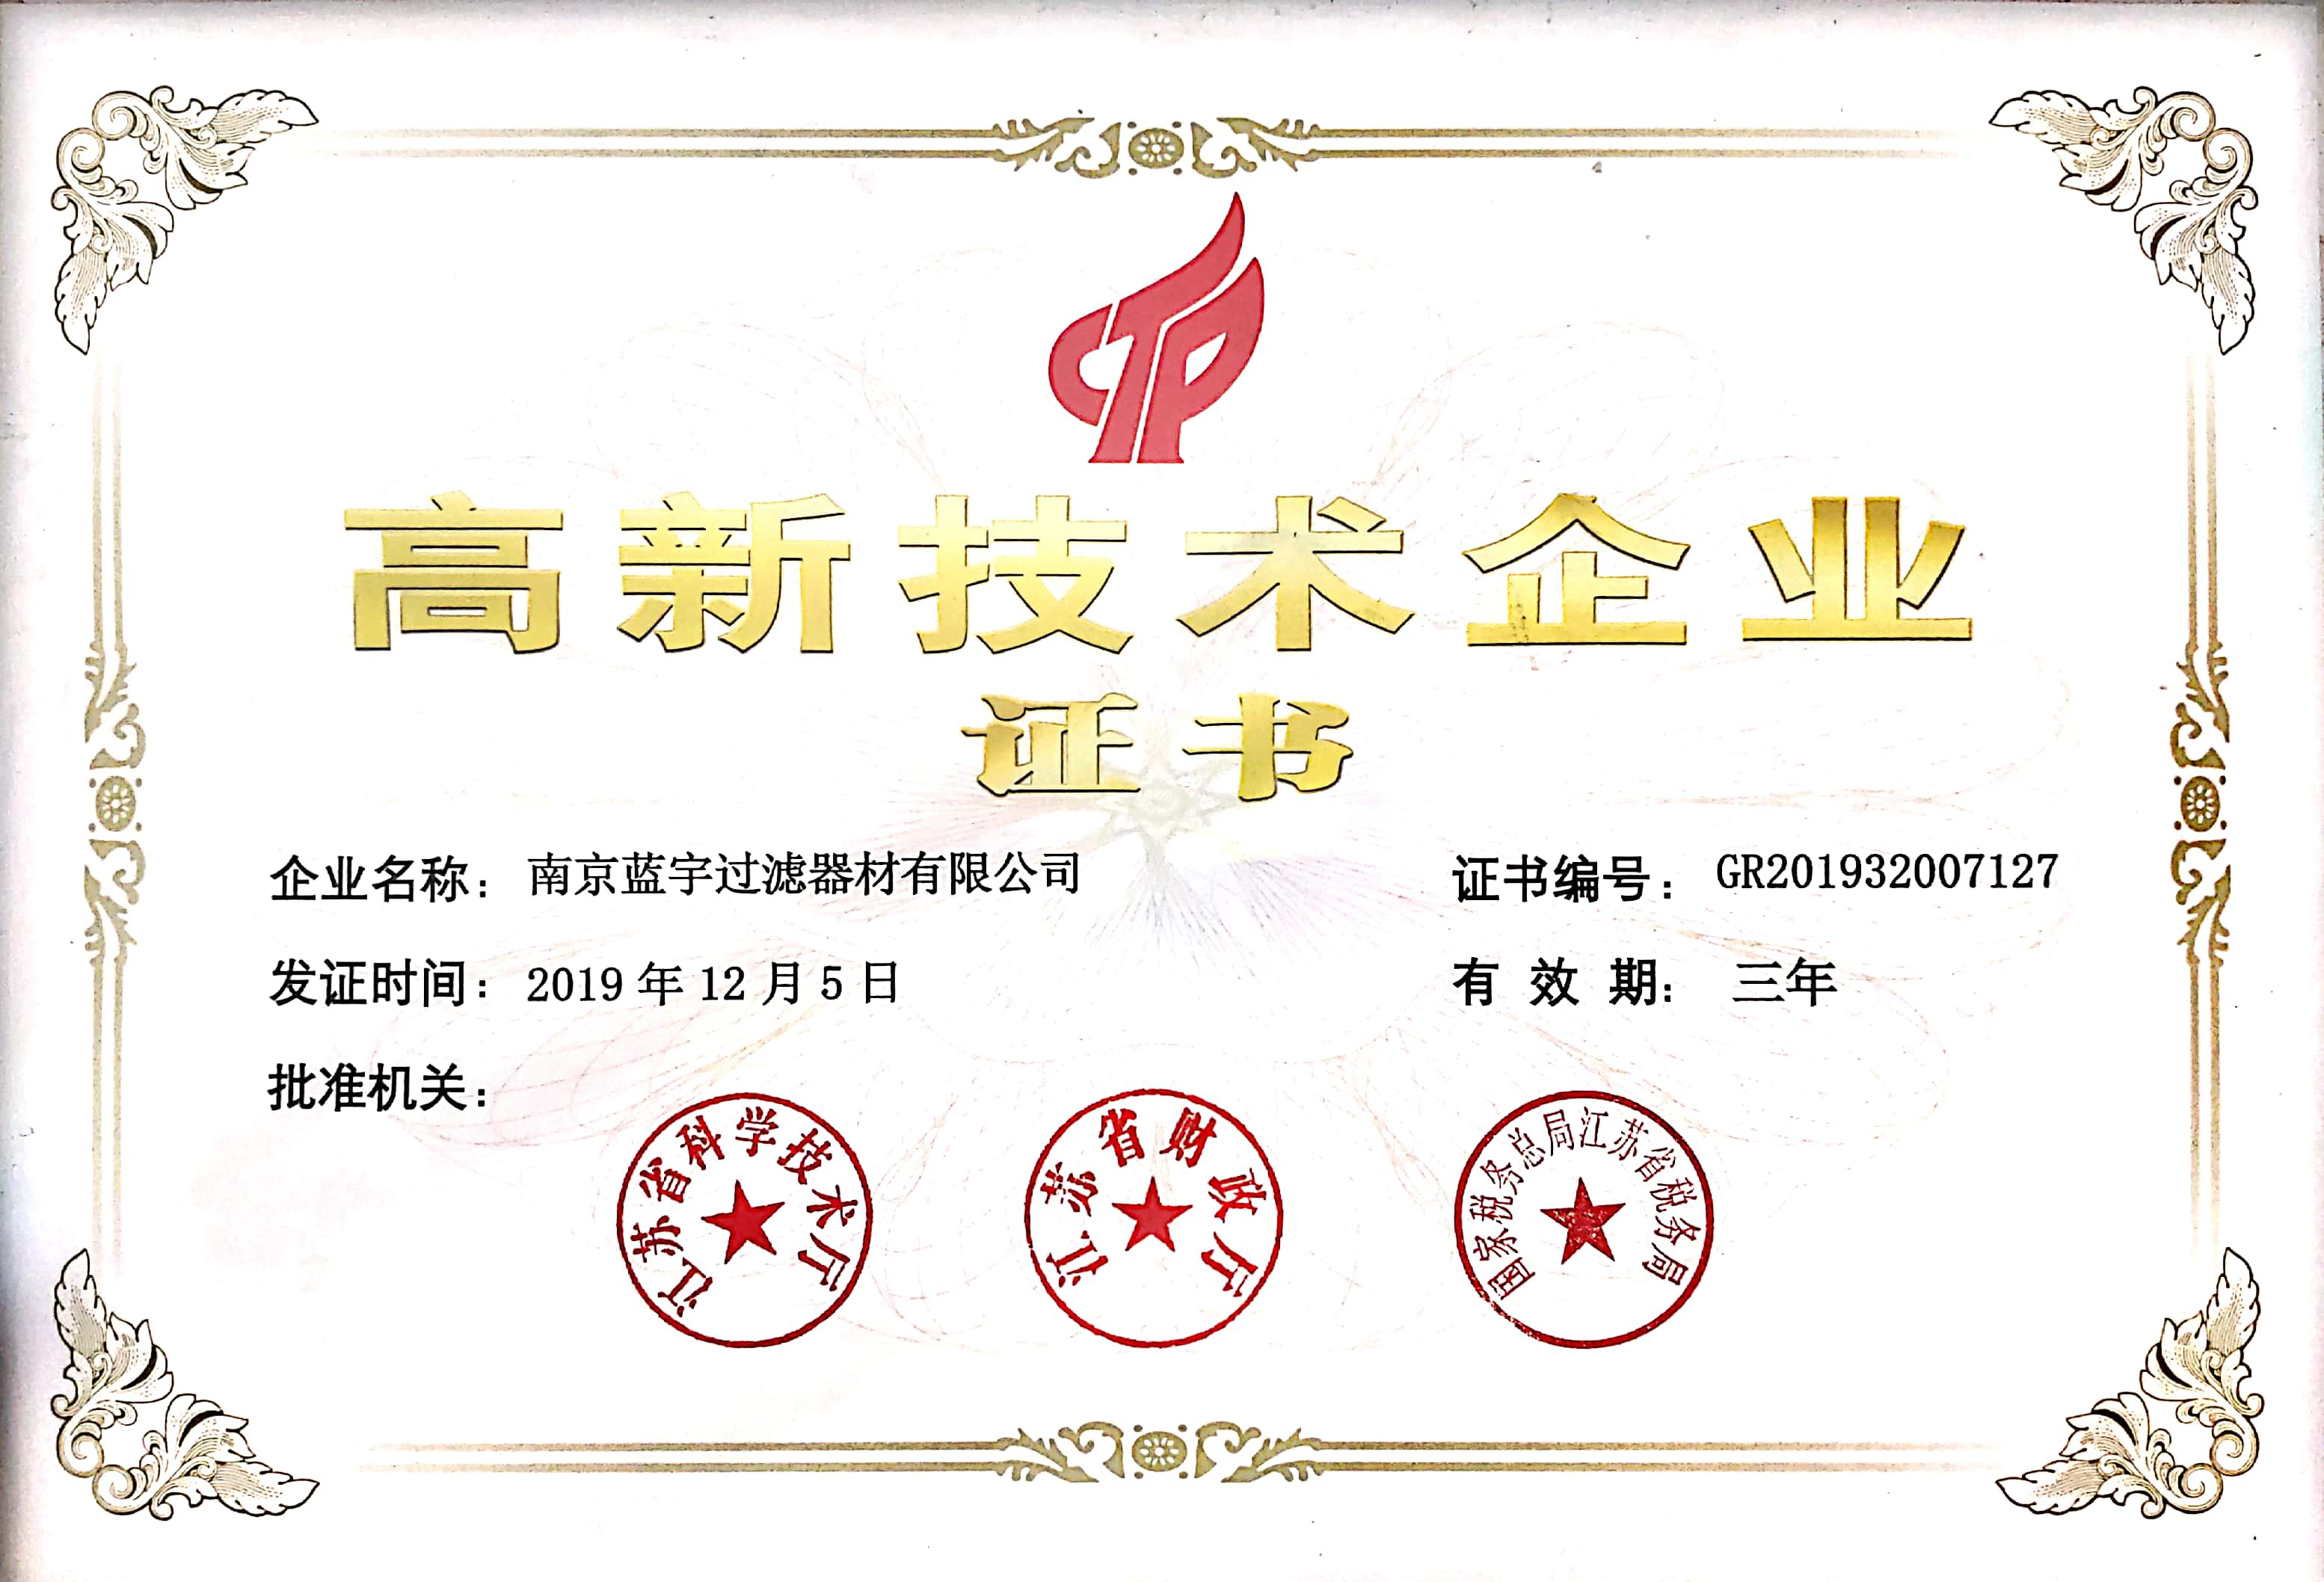 Nanjing Blue Sky Filter Co., Ltd. 축하합니다.국가첨단기술기업인증 획득